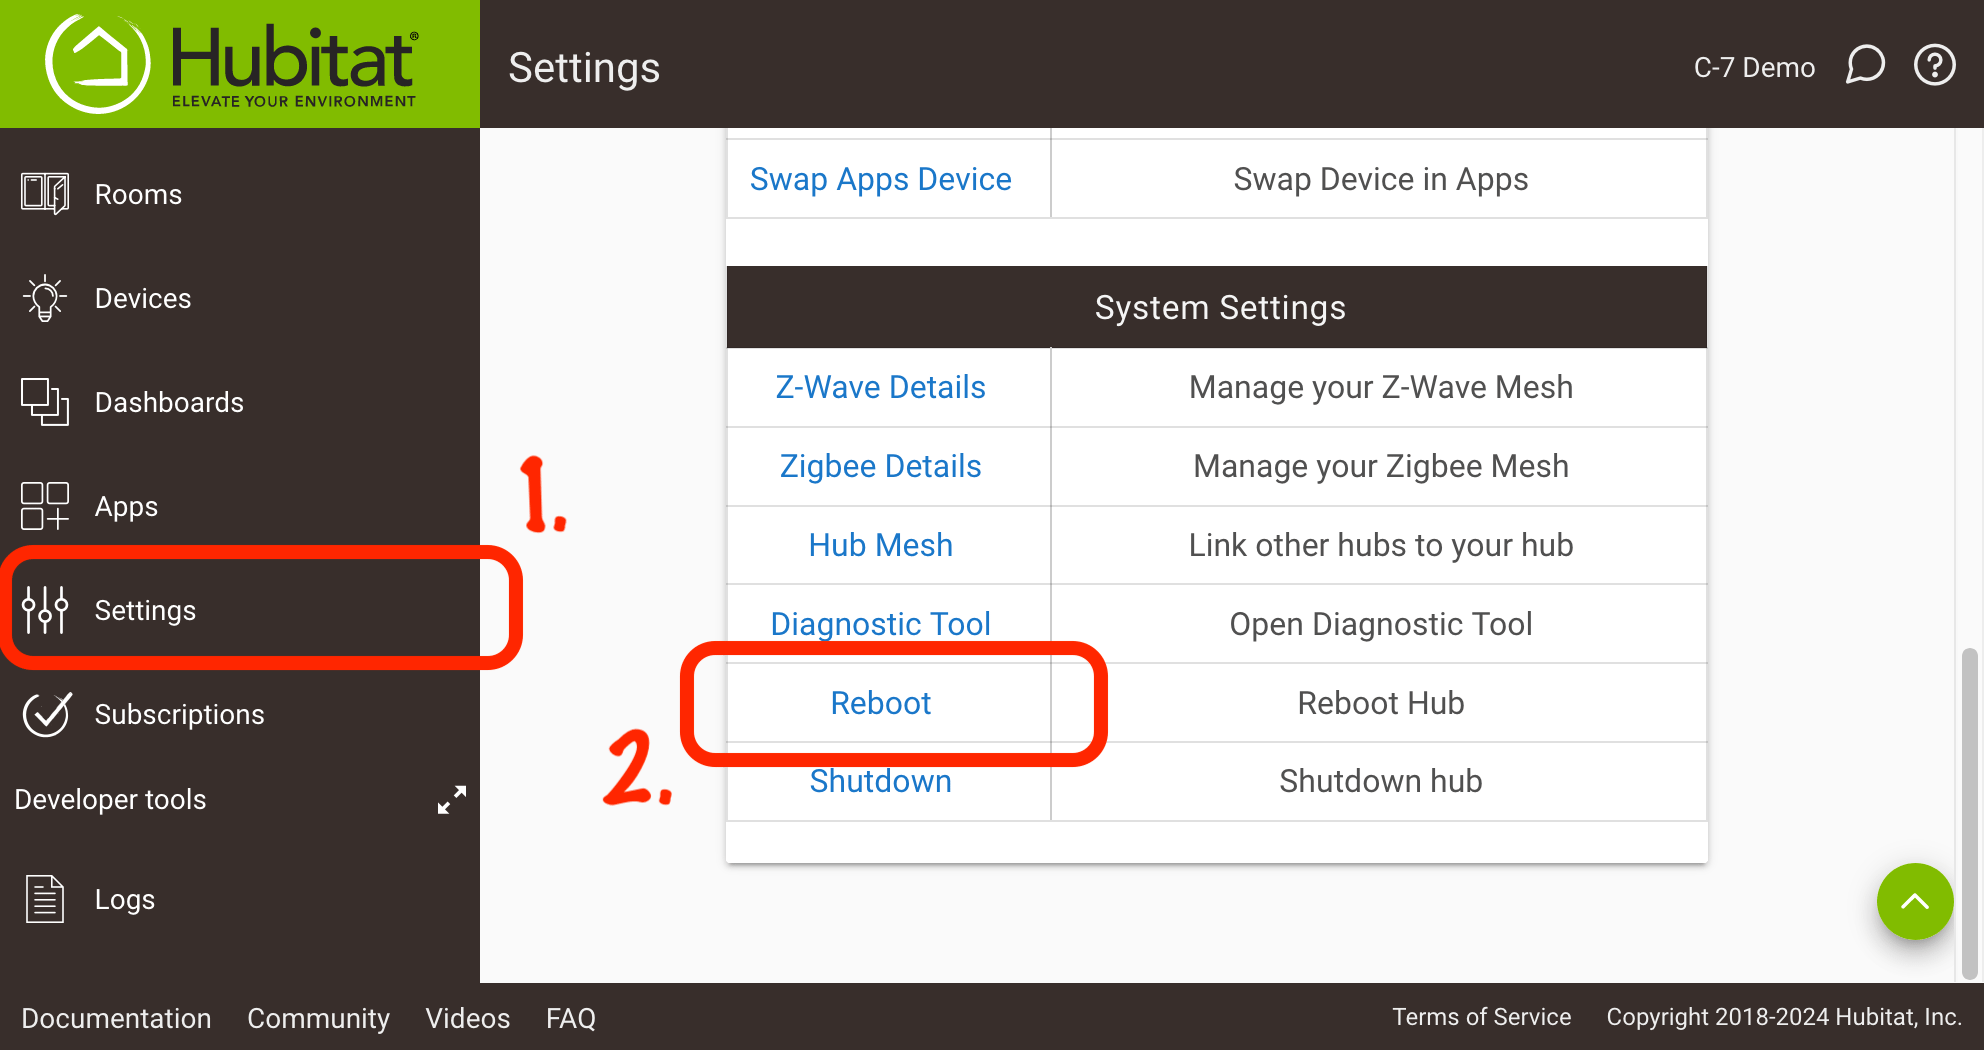 Screenshot: "Reboot" option on "Settings" page